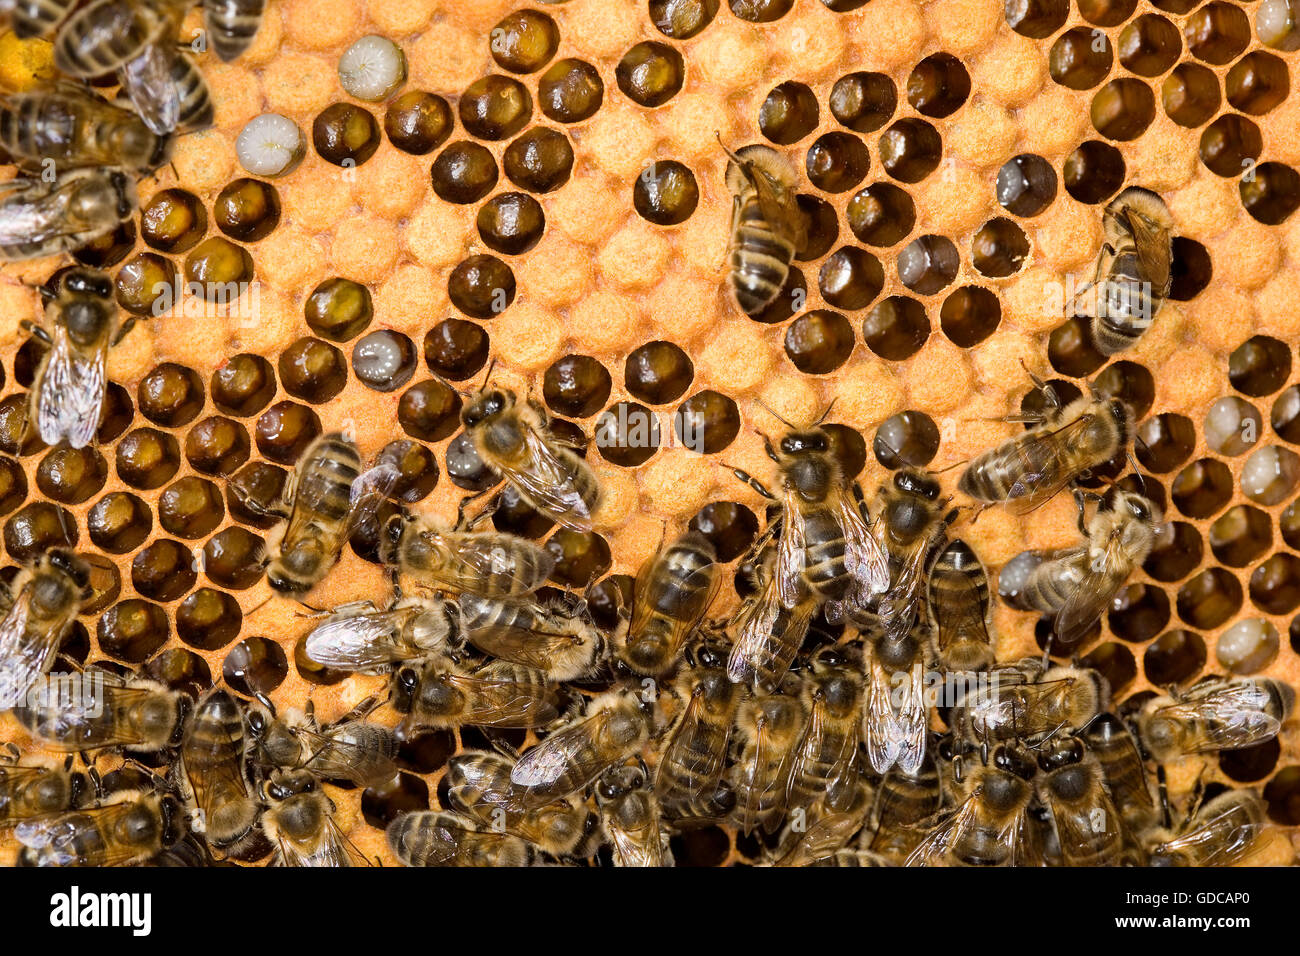 HONEY BEE apis mellifera IN NORMANDY Stock Photo